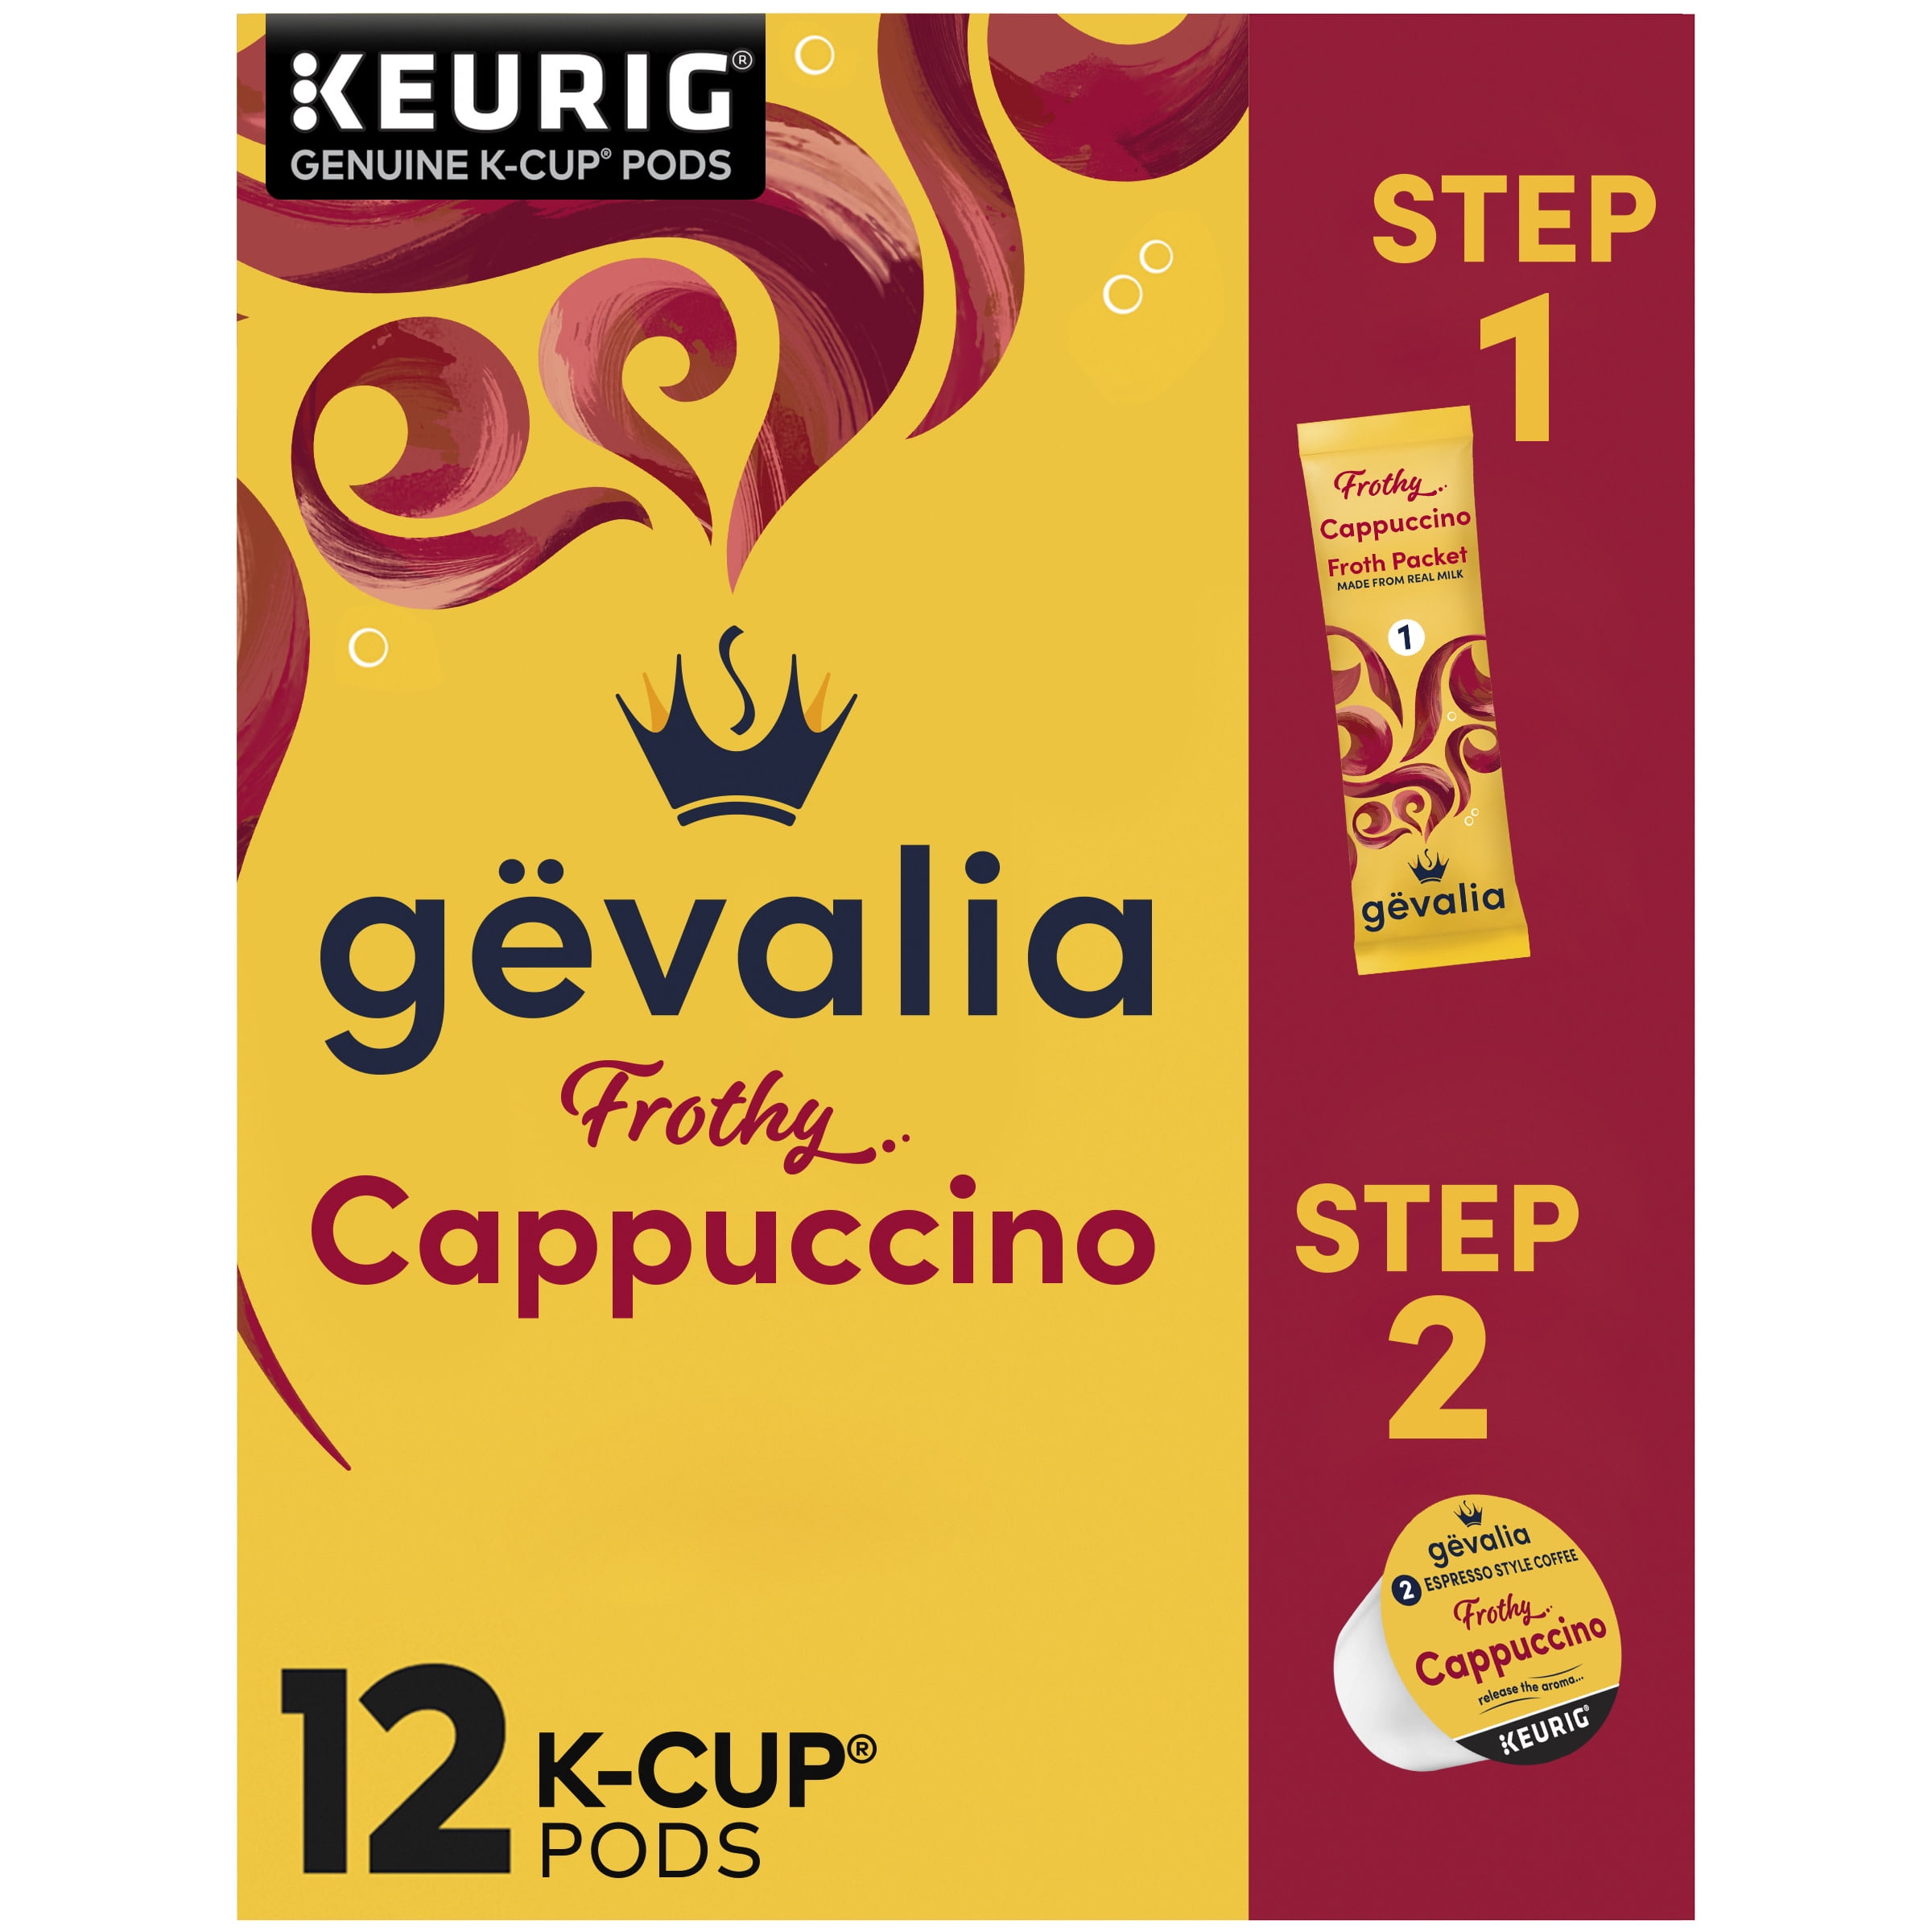 Gevalia Cappuccino K Cup Espresso Coffee Pods & Cappuccino Froth Packets, 12 ct Box